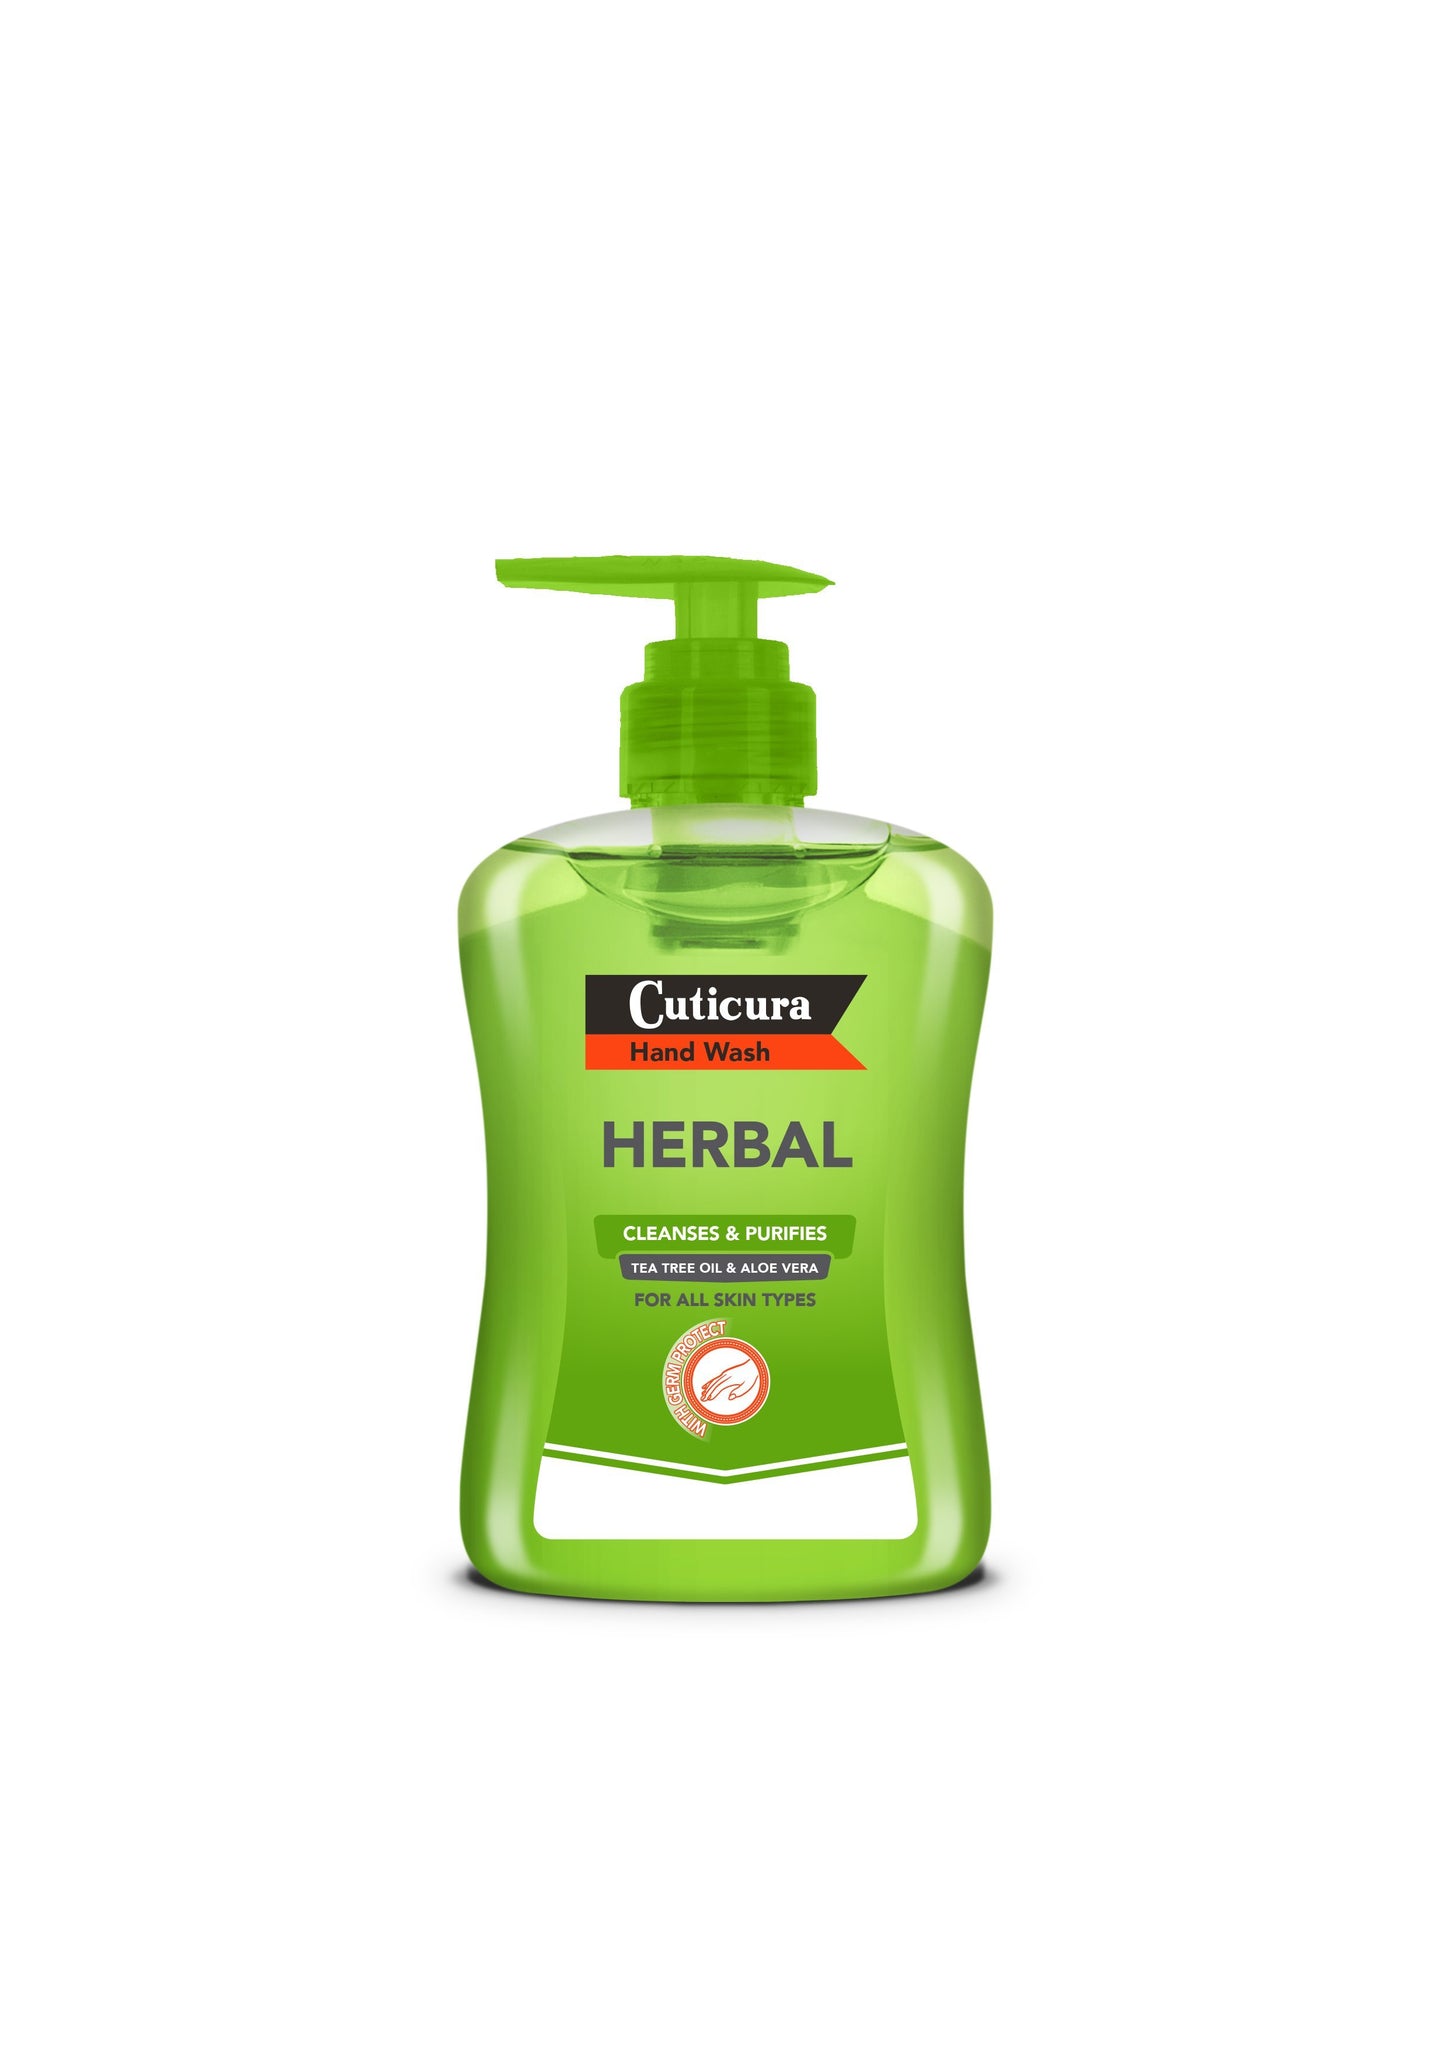 Cuticura - Herbal Hand Wash - 300ml 24-Pack